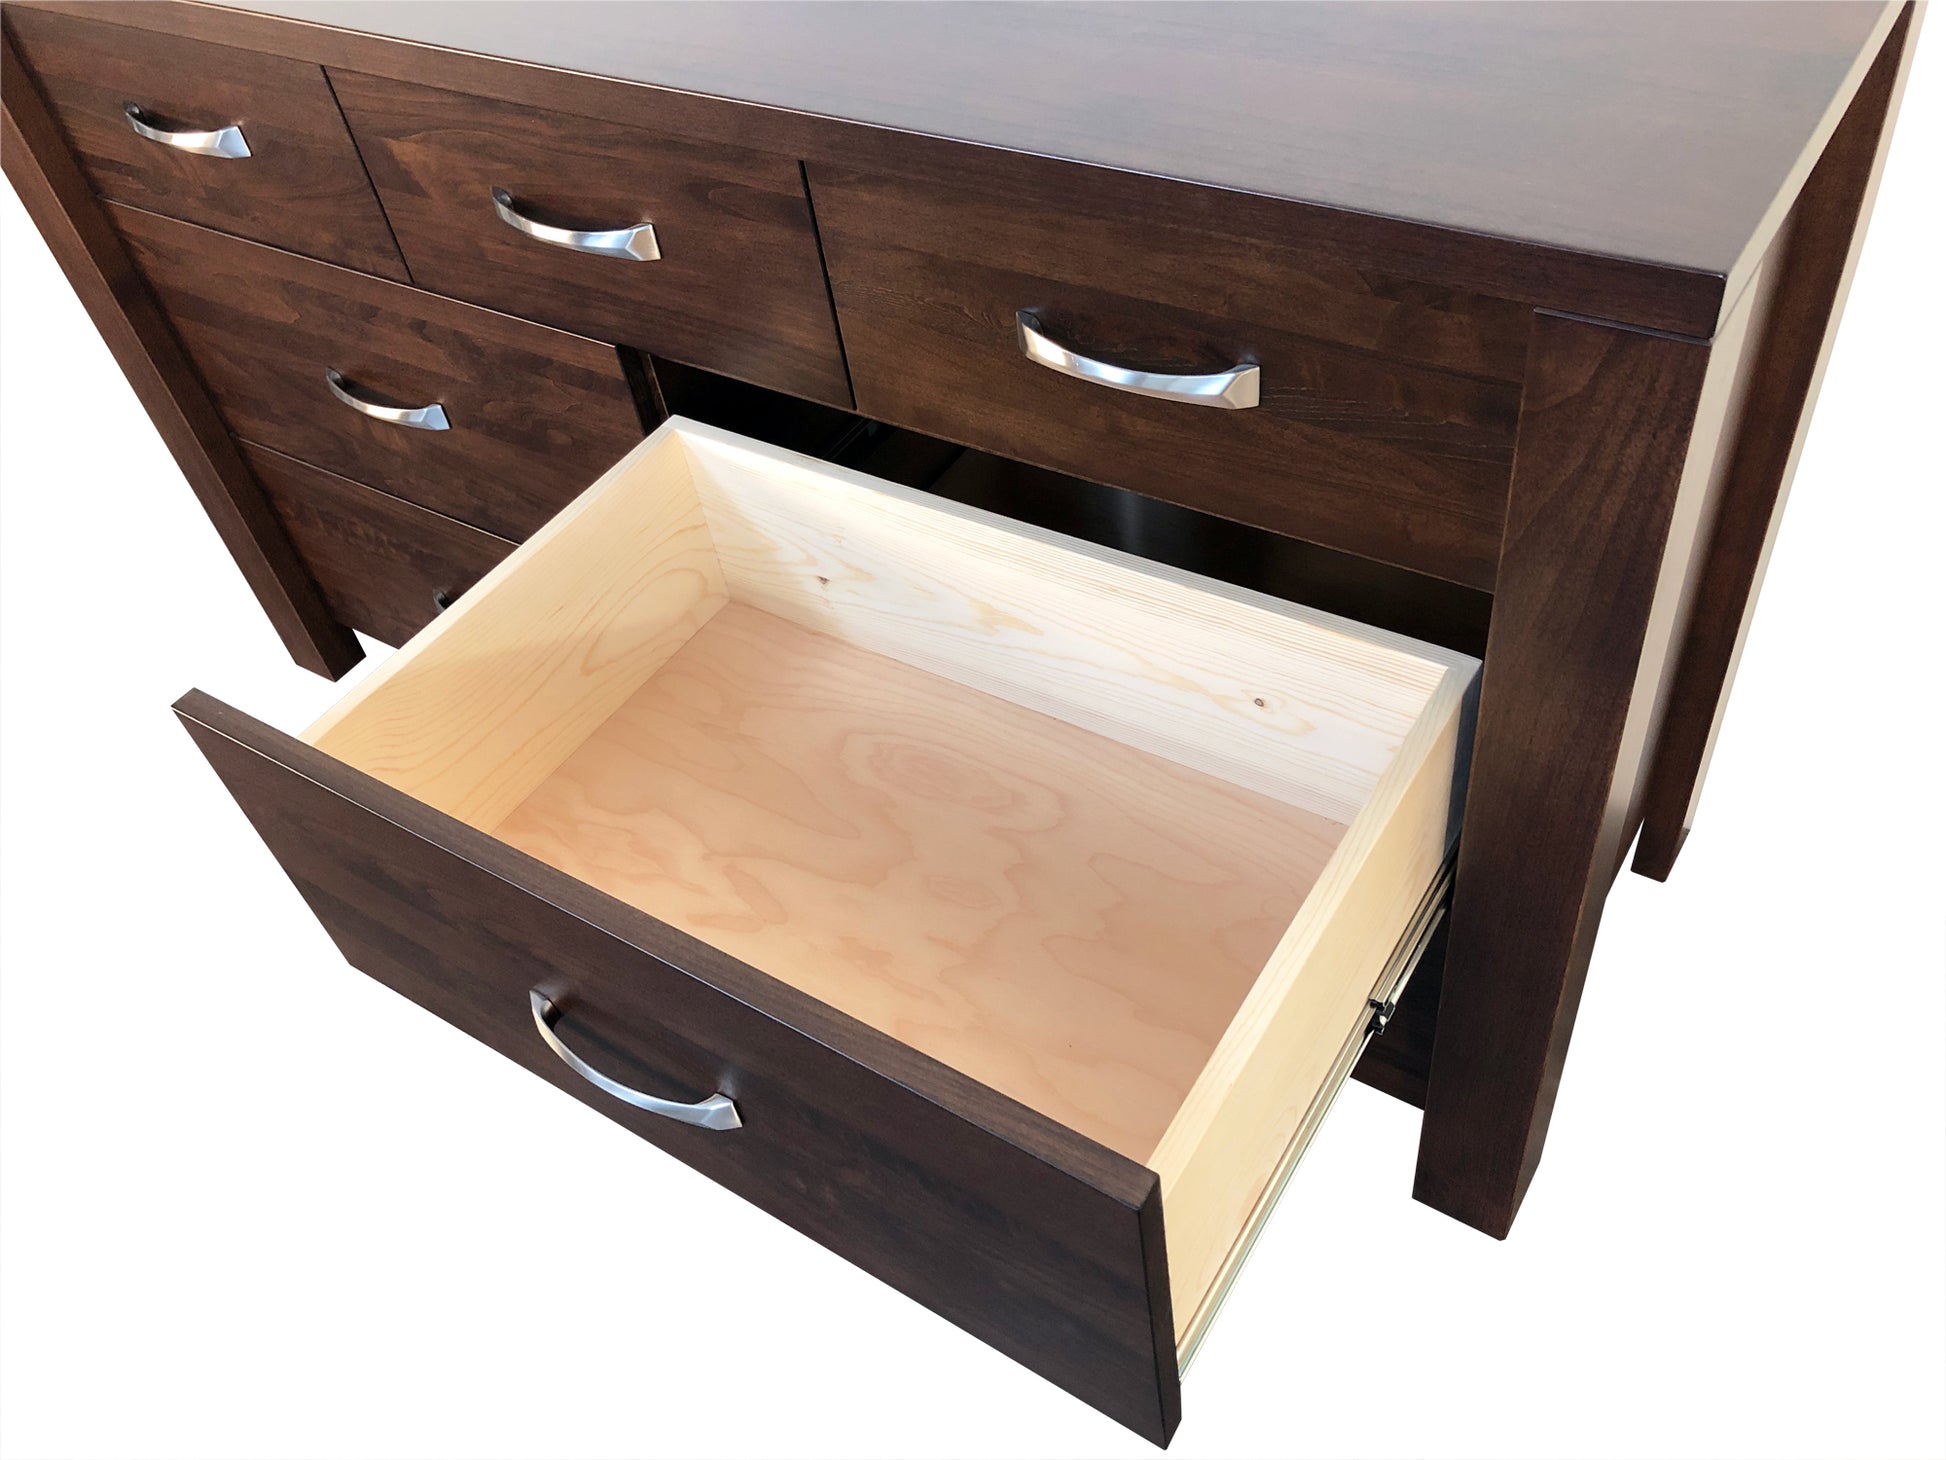 Boxwood Drawer - open drawer